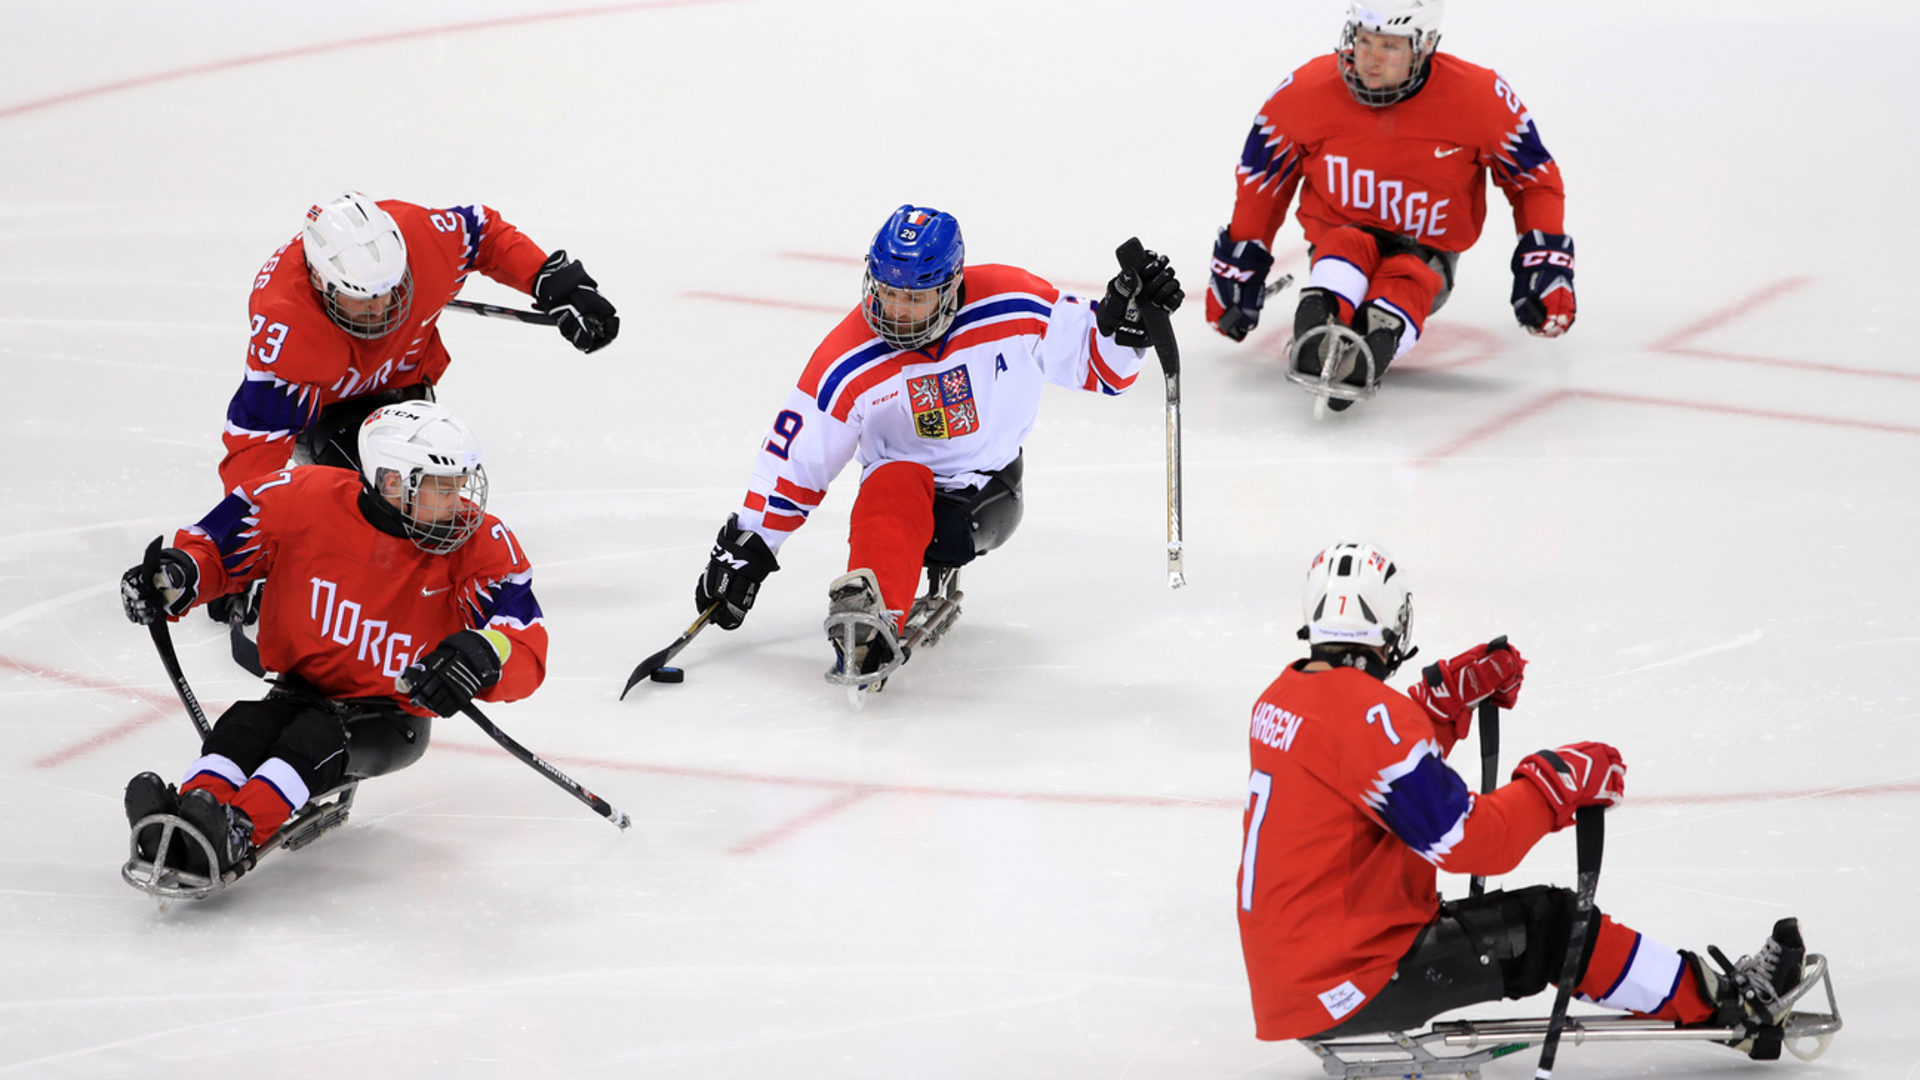 Hockeymatch an den Winter Paralympics in PyeongChang 2018